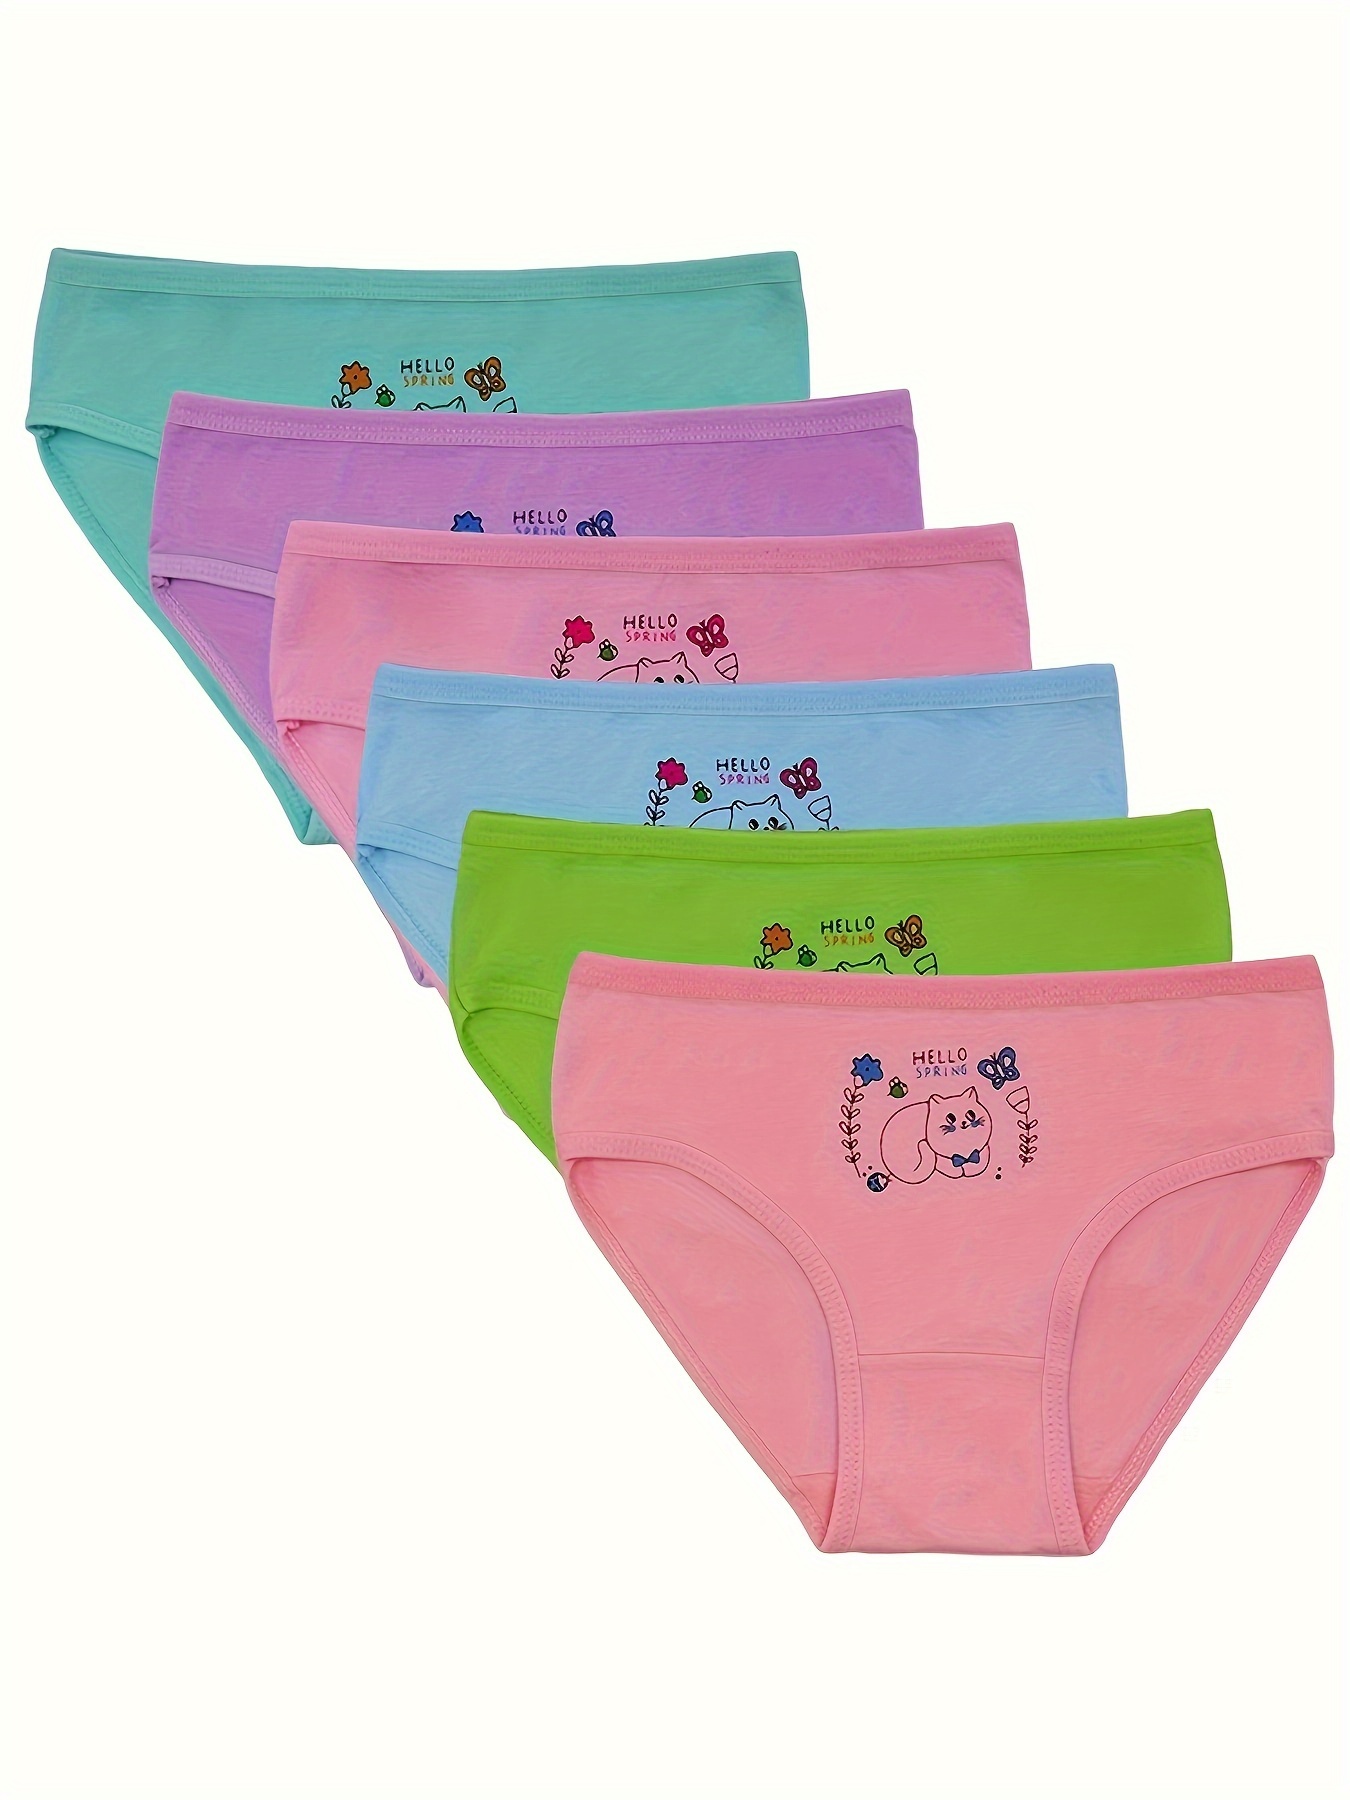 4 PCS Hello Kitty Panties Kids Children Underwear Kids Panties